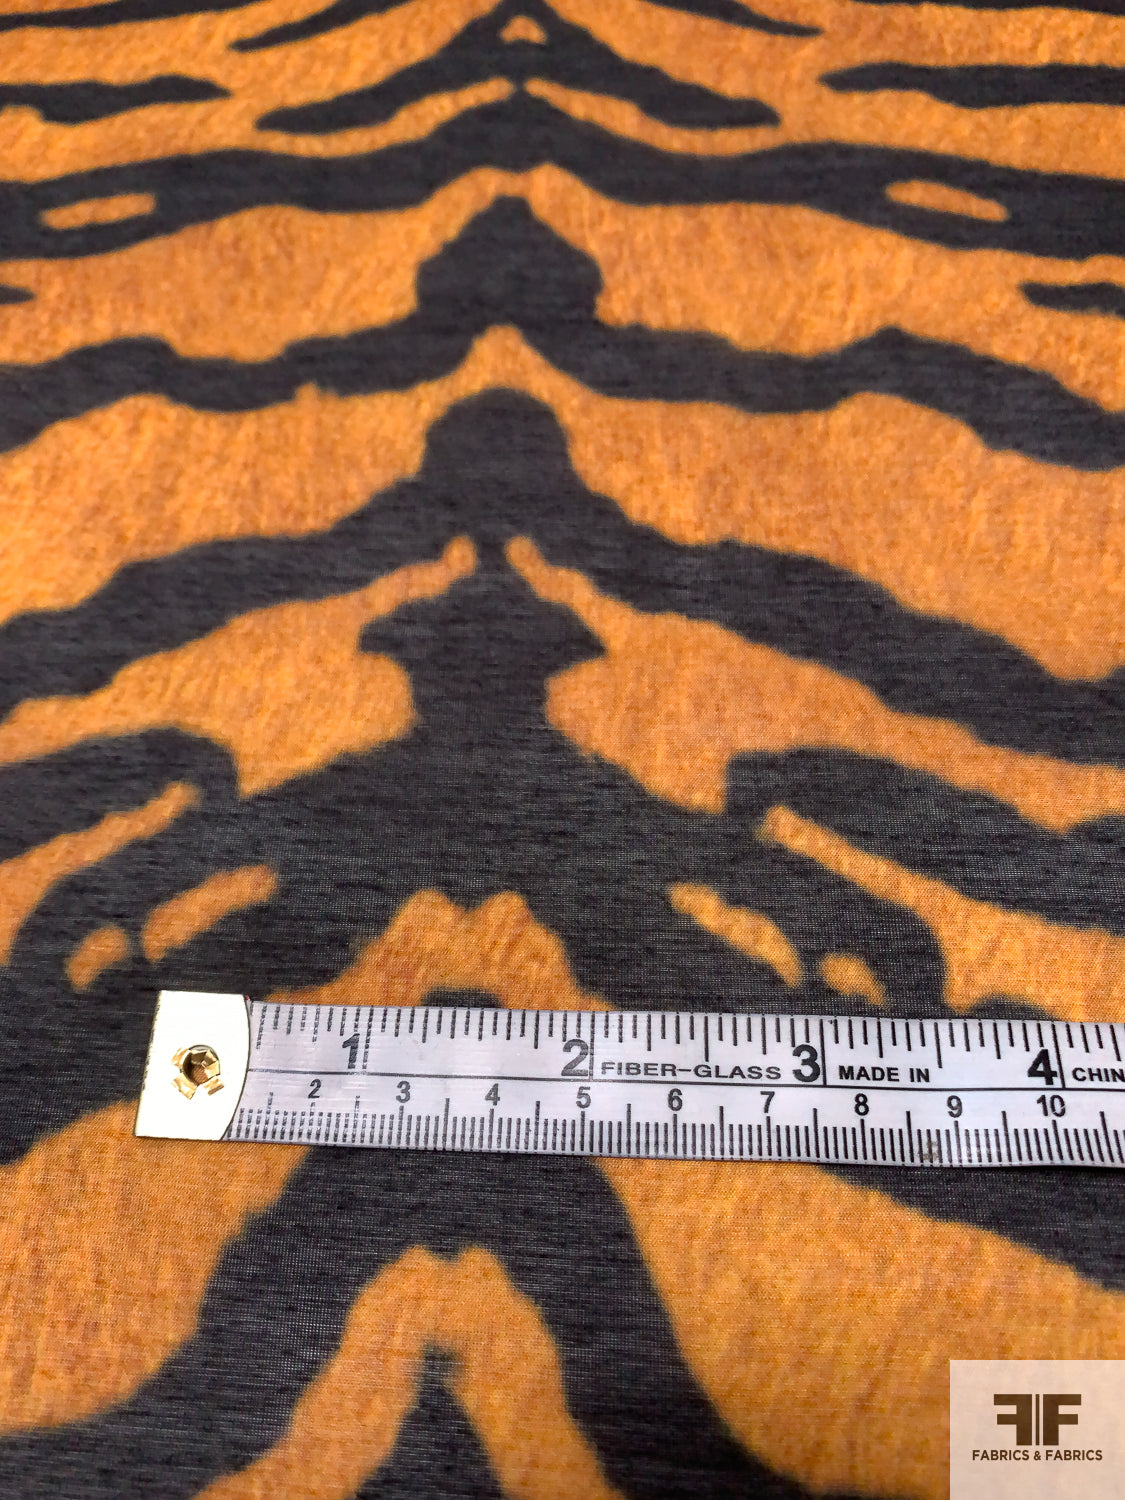 Tiger Pattern Printed Polyester Voile-Chiffon - Golden Caramel / Black